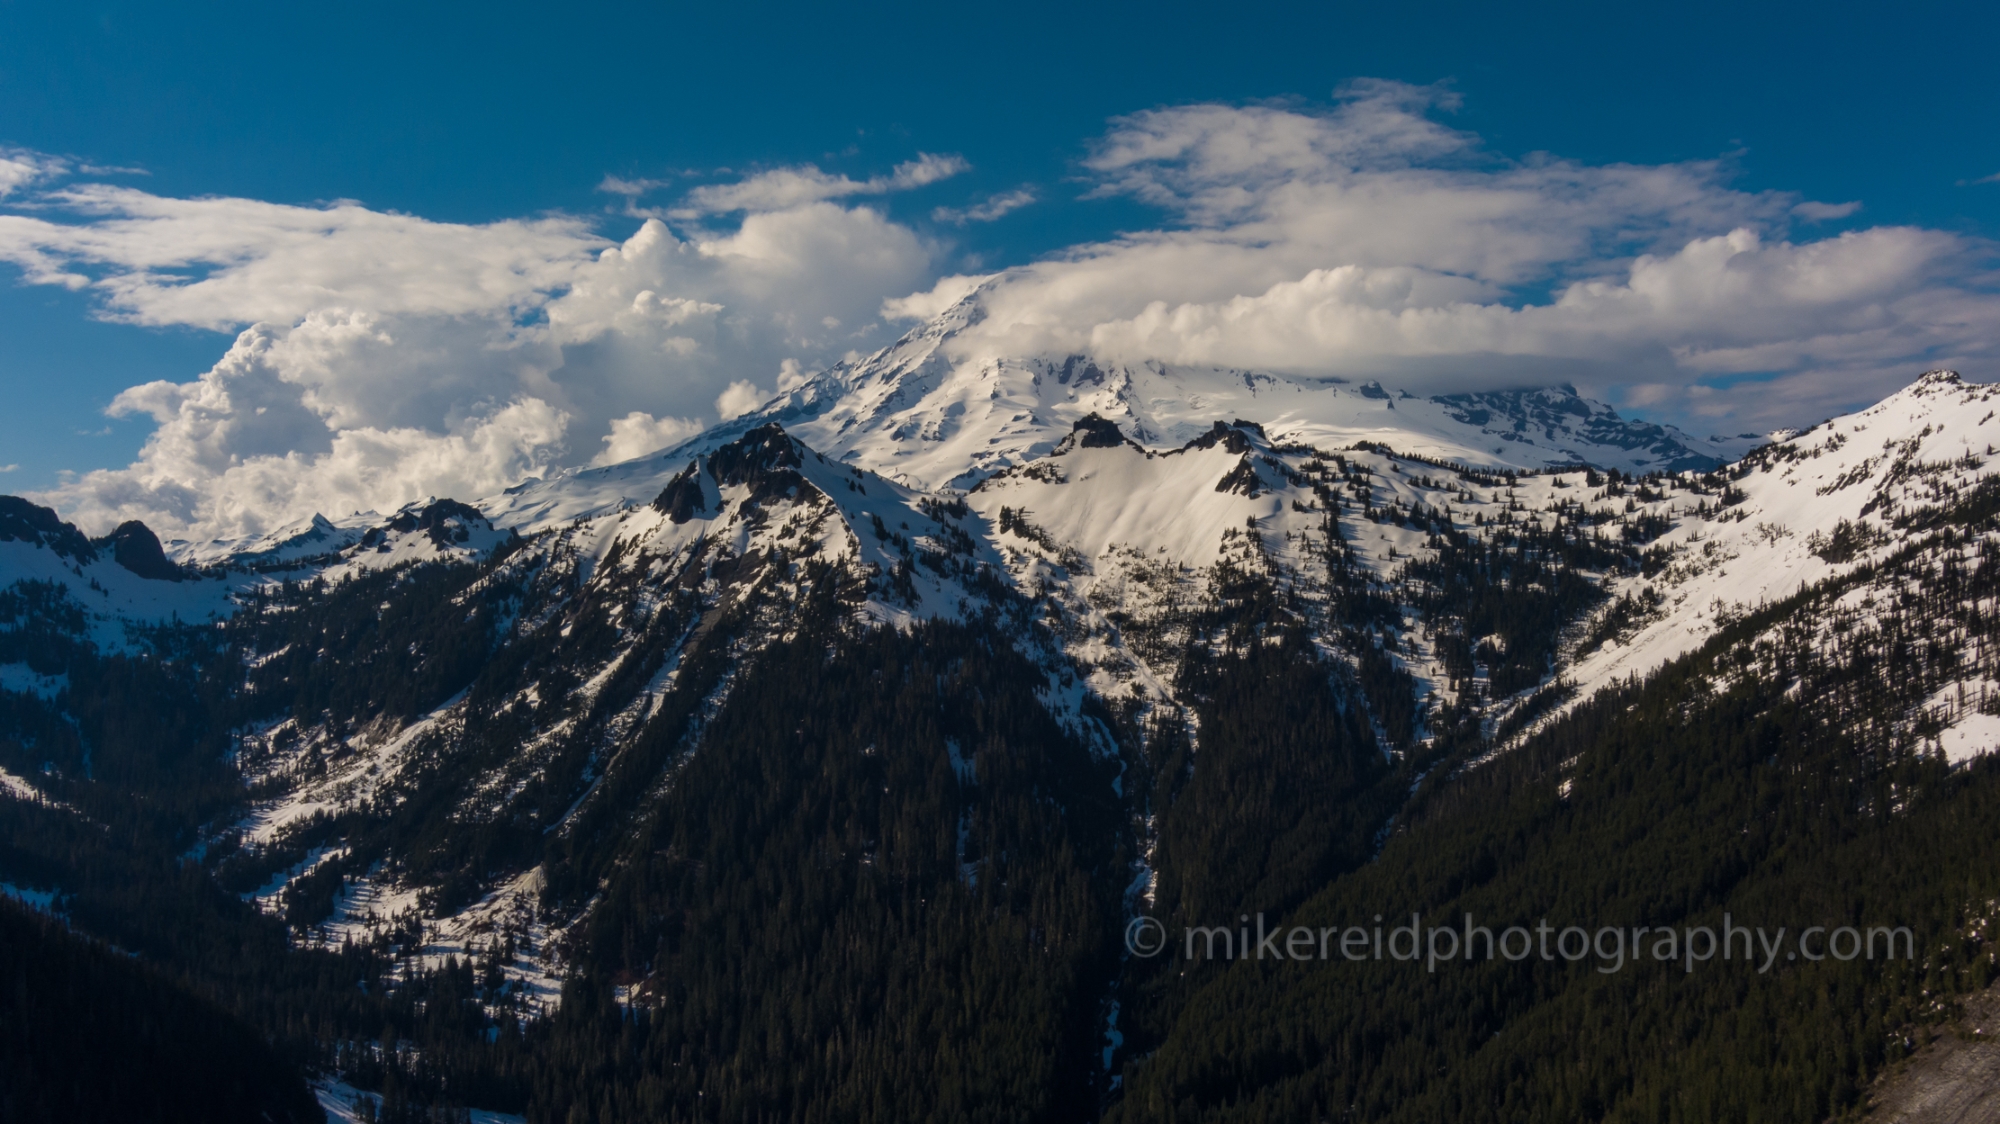 Over Mount Rainier Tatoosh Range Aerial Photography